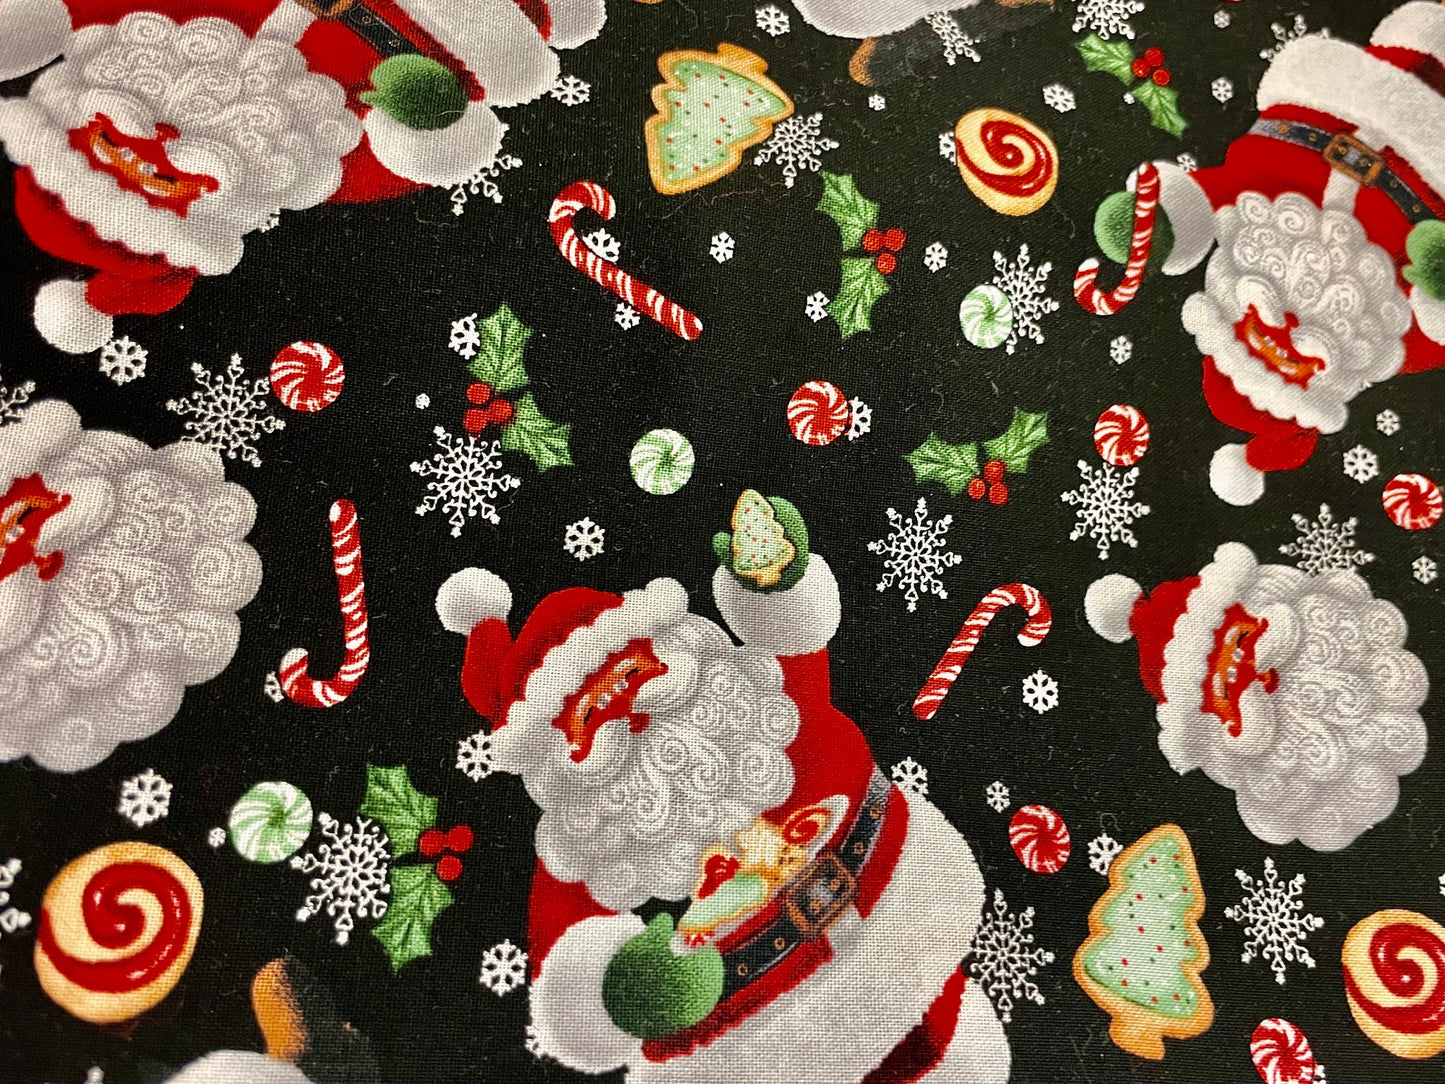 Adorable Santa and cookies Blanket!